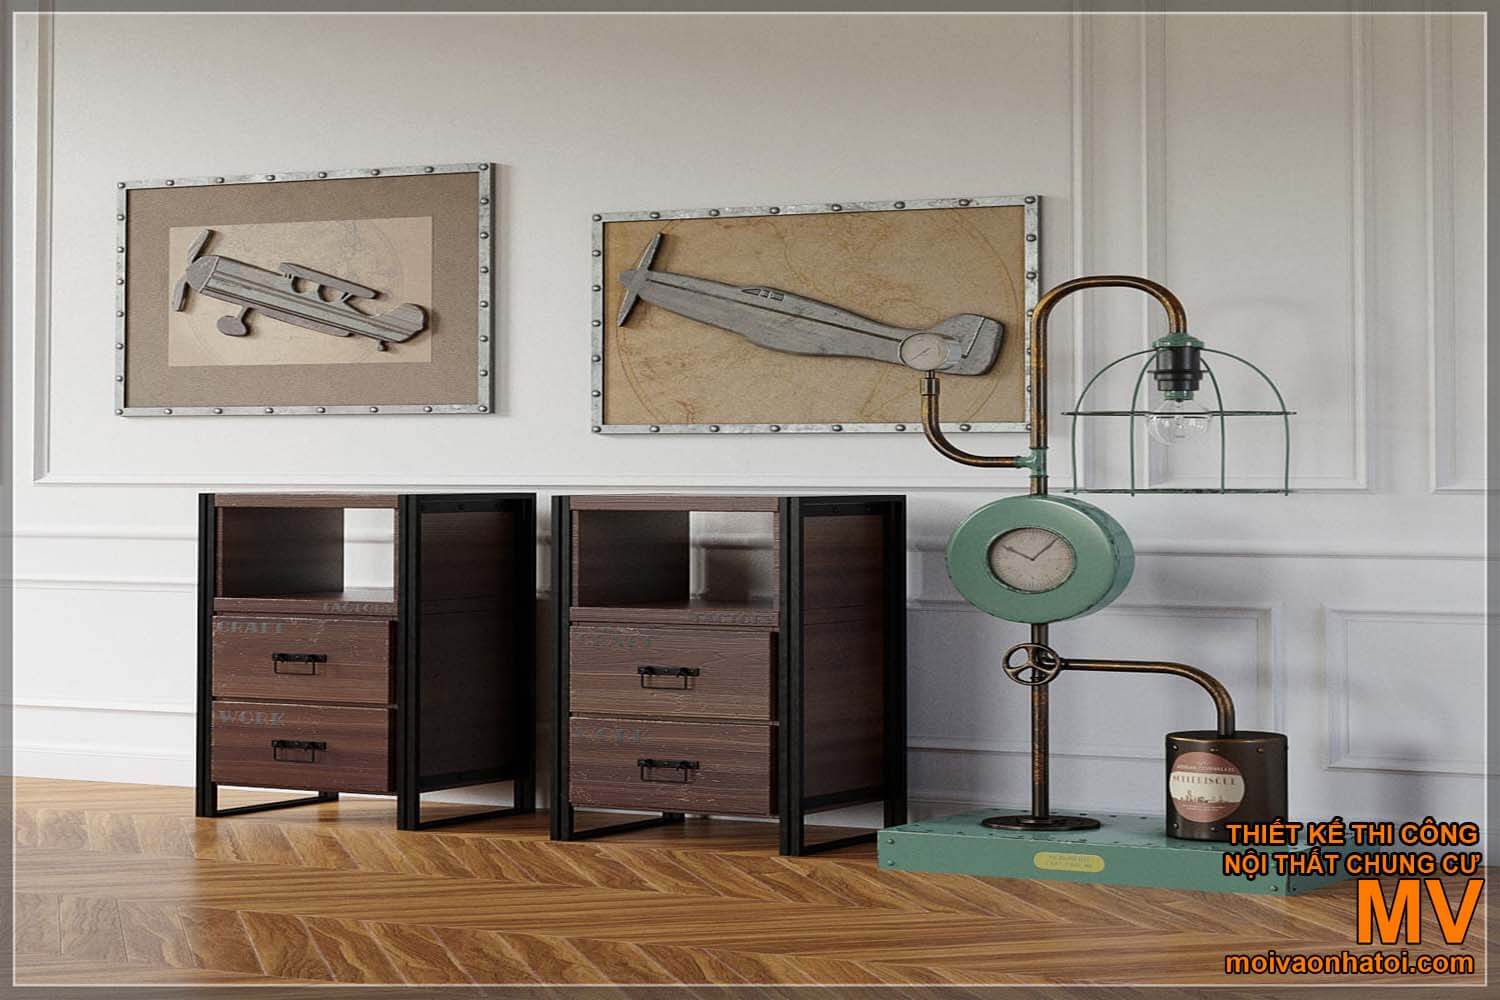 İskandinav tarzı mobilyalar